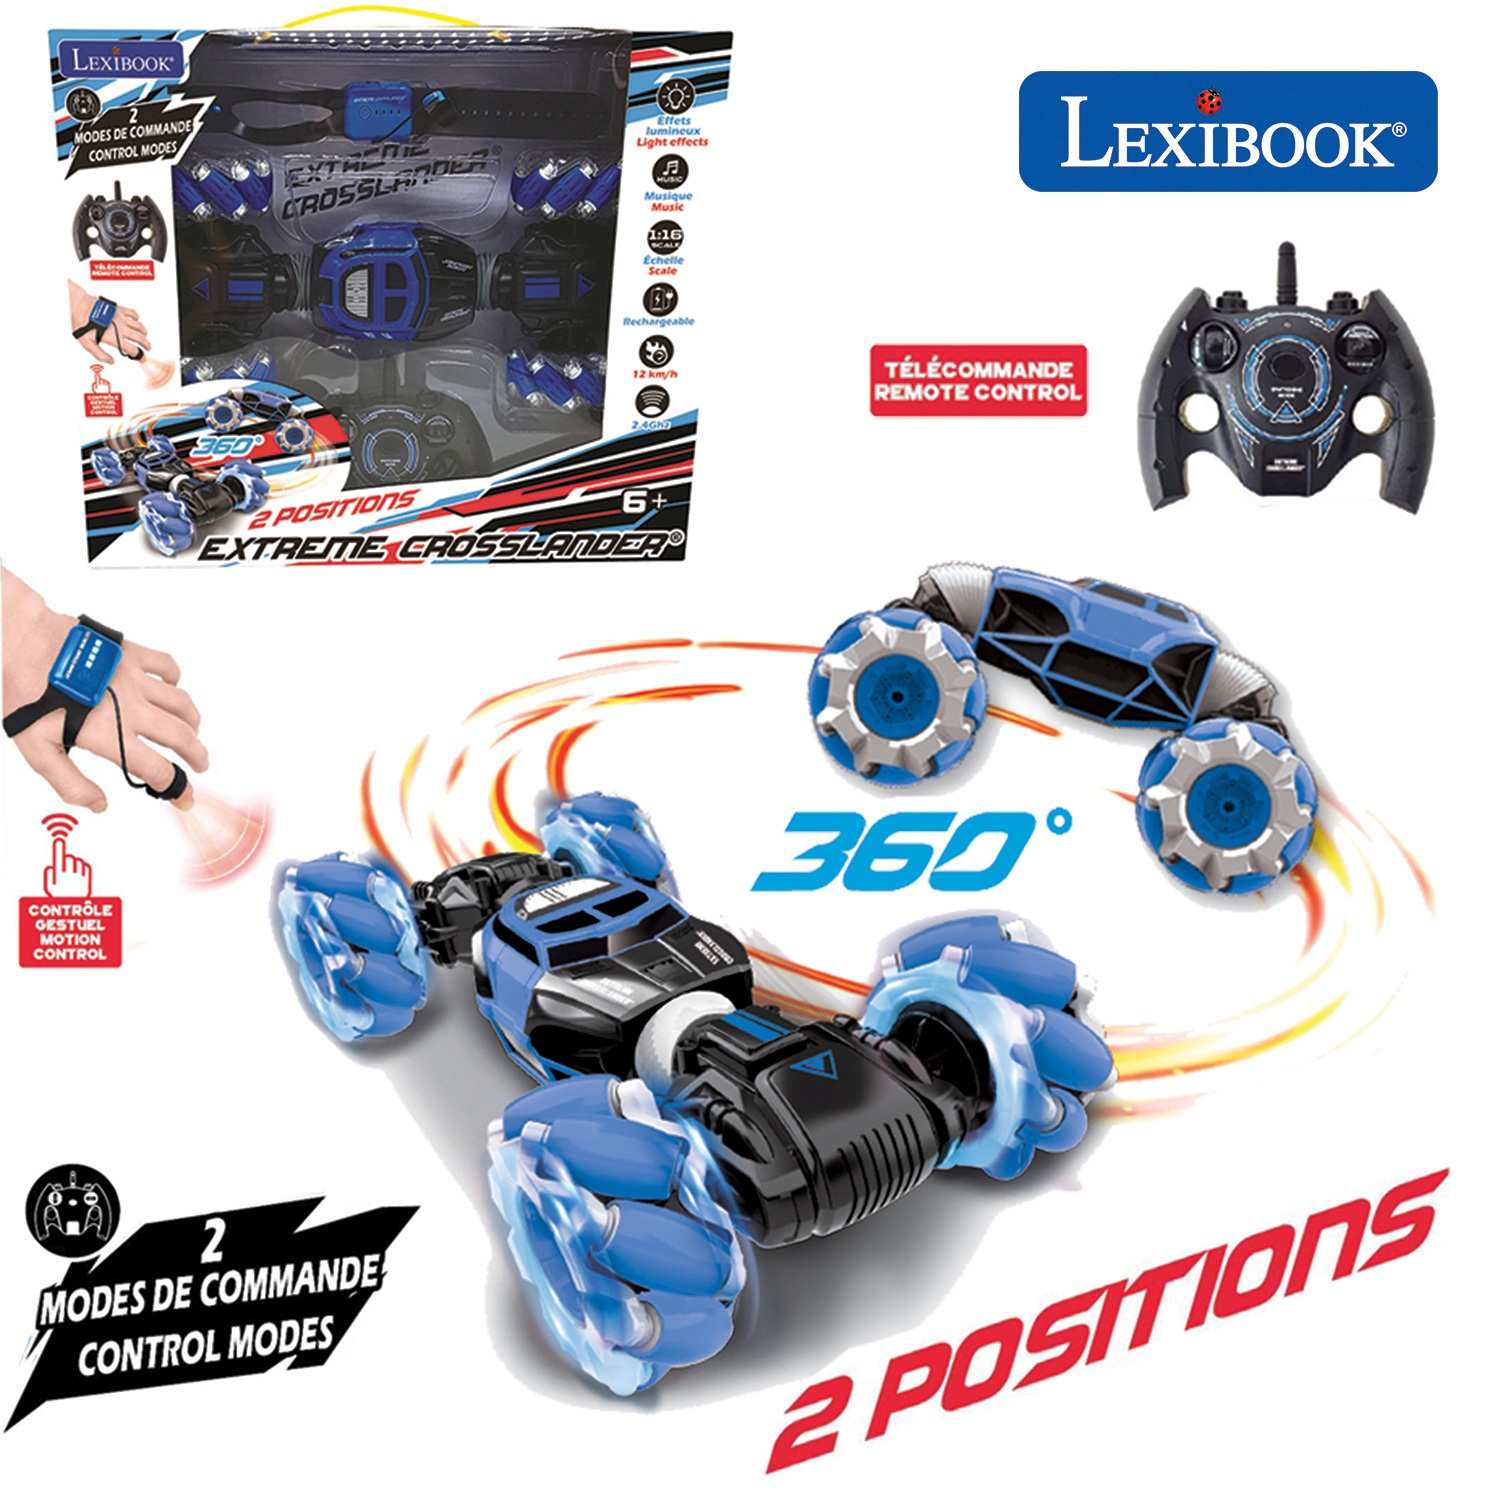 Lexibook Extreme Crosslander